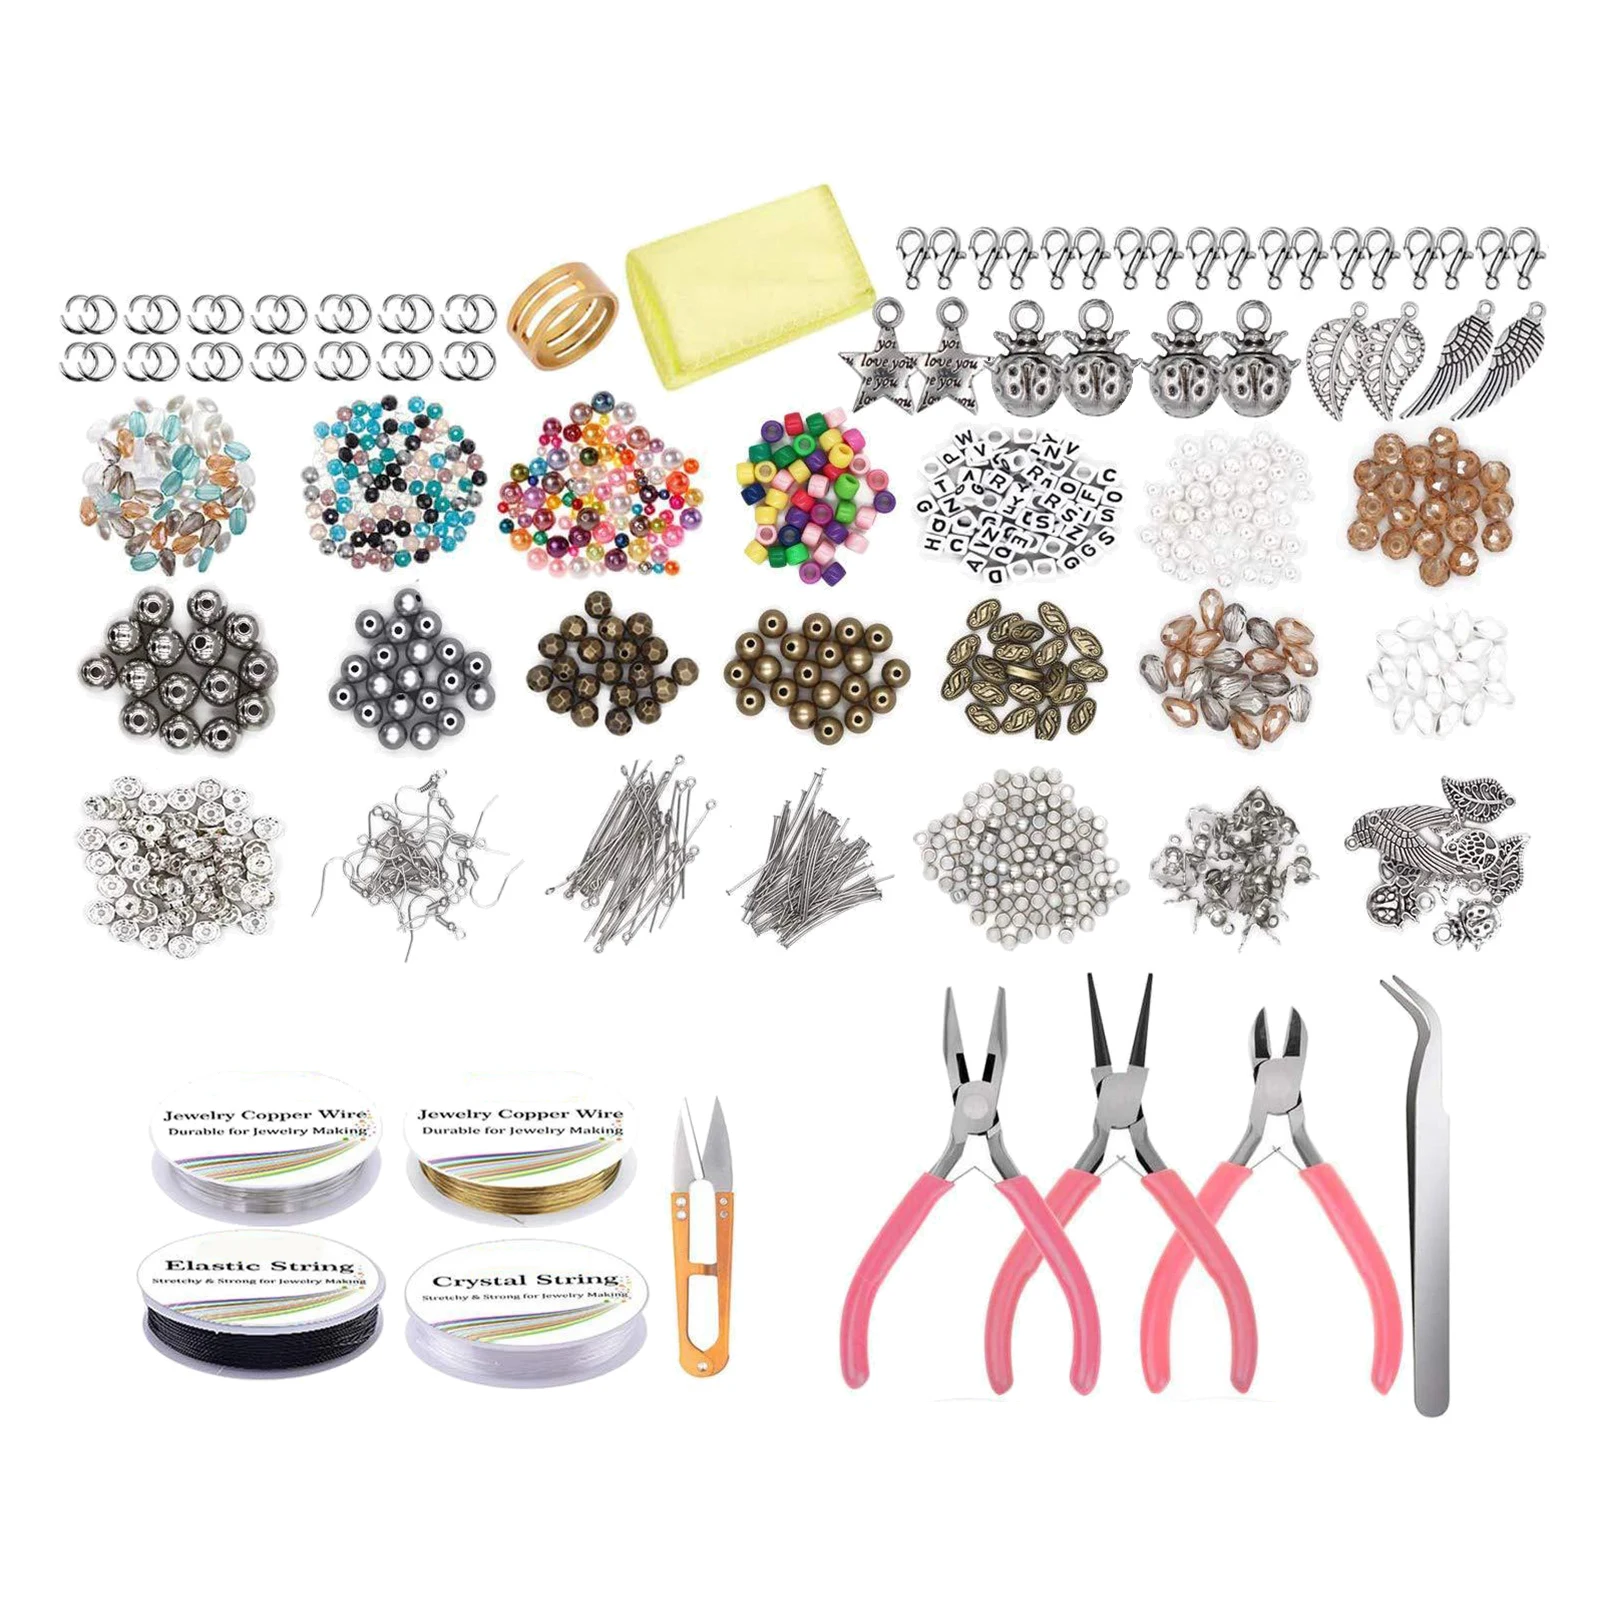 1171 Pcs / Set Jewelry Making Supplies for Bracelet Jewelry Making Kit